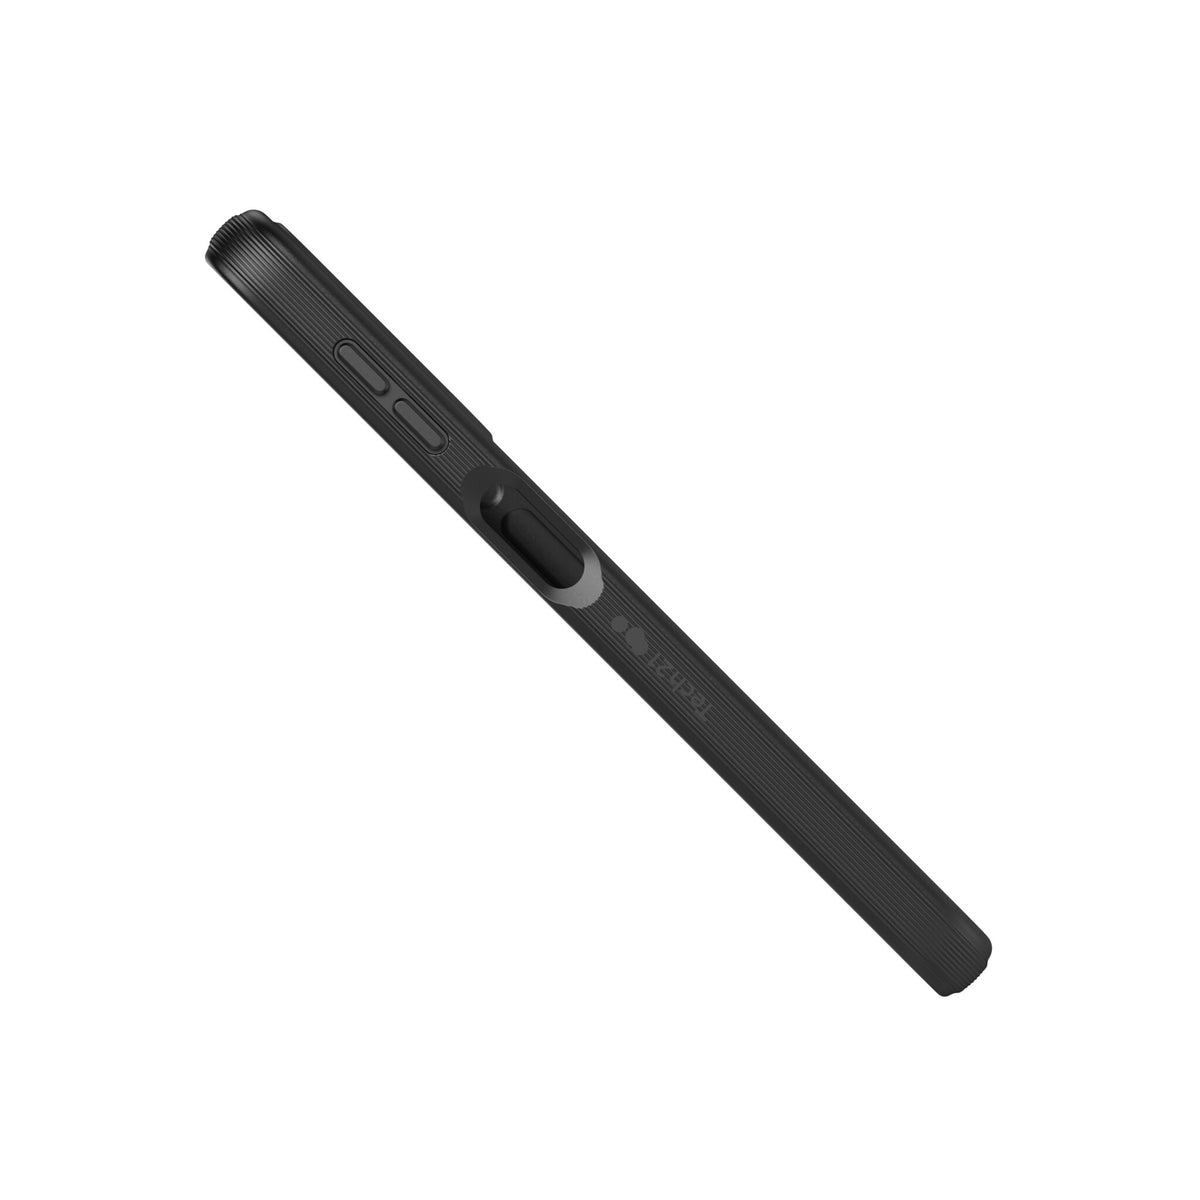 Tech21 Evo Lite for Galaxy A14 (4G) in Black